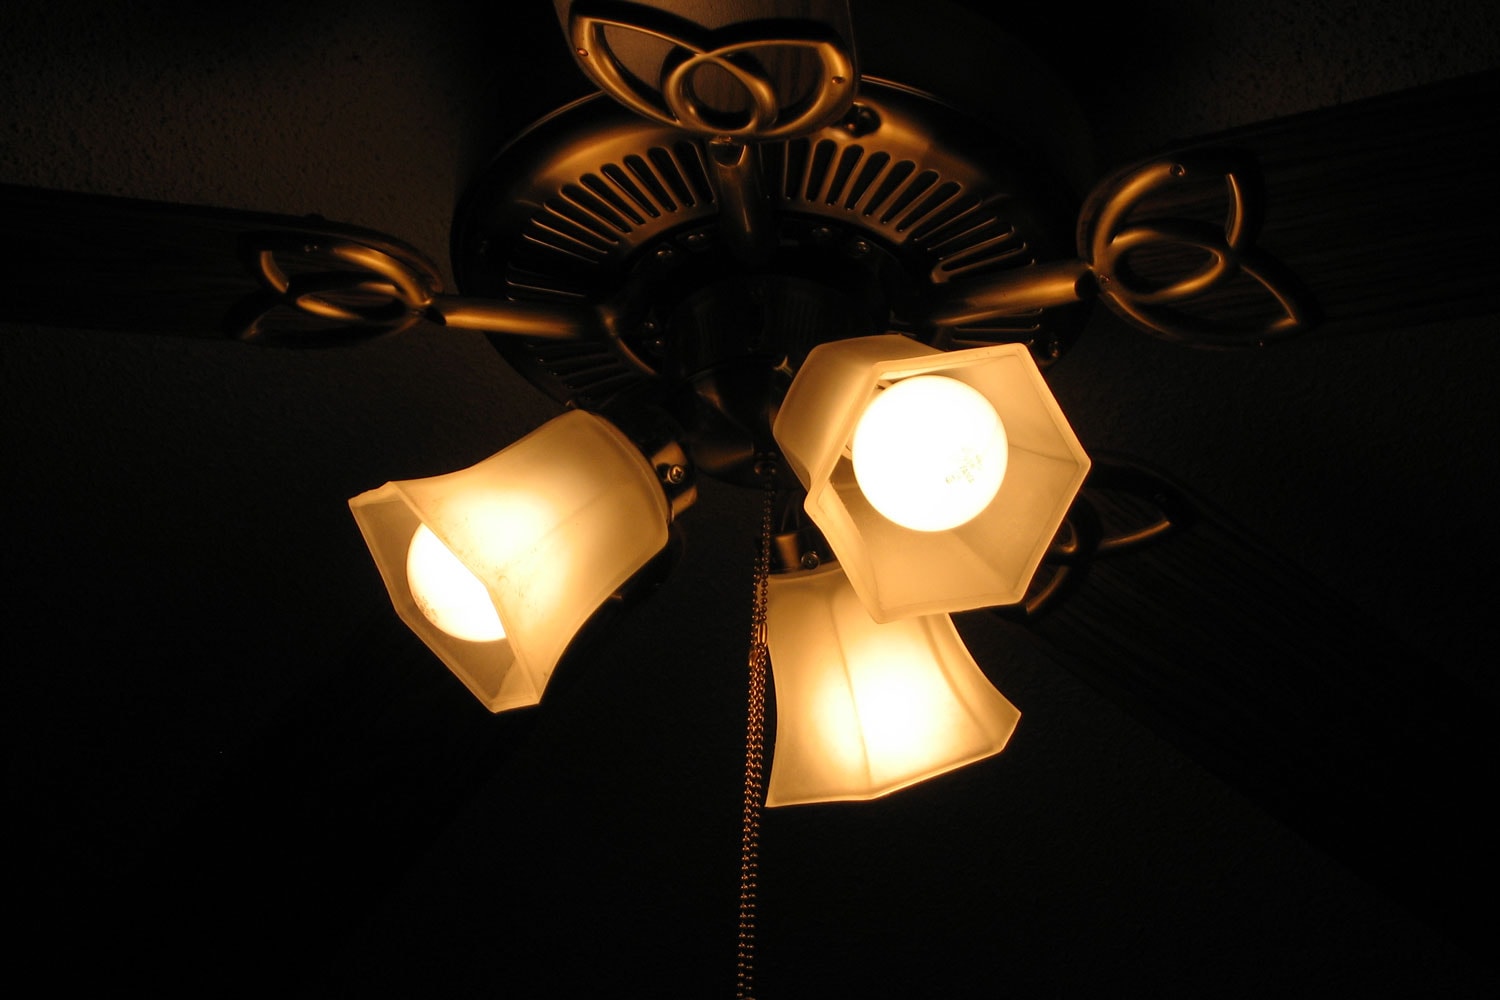 A geometric shaped ceiling fan with three hexagonal glass housed light bulbs